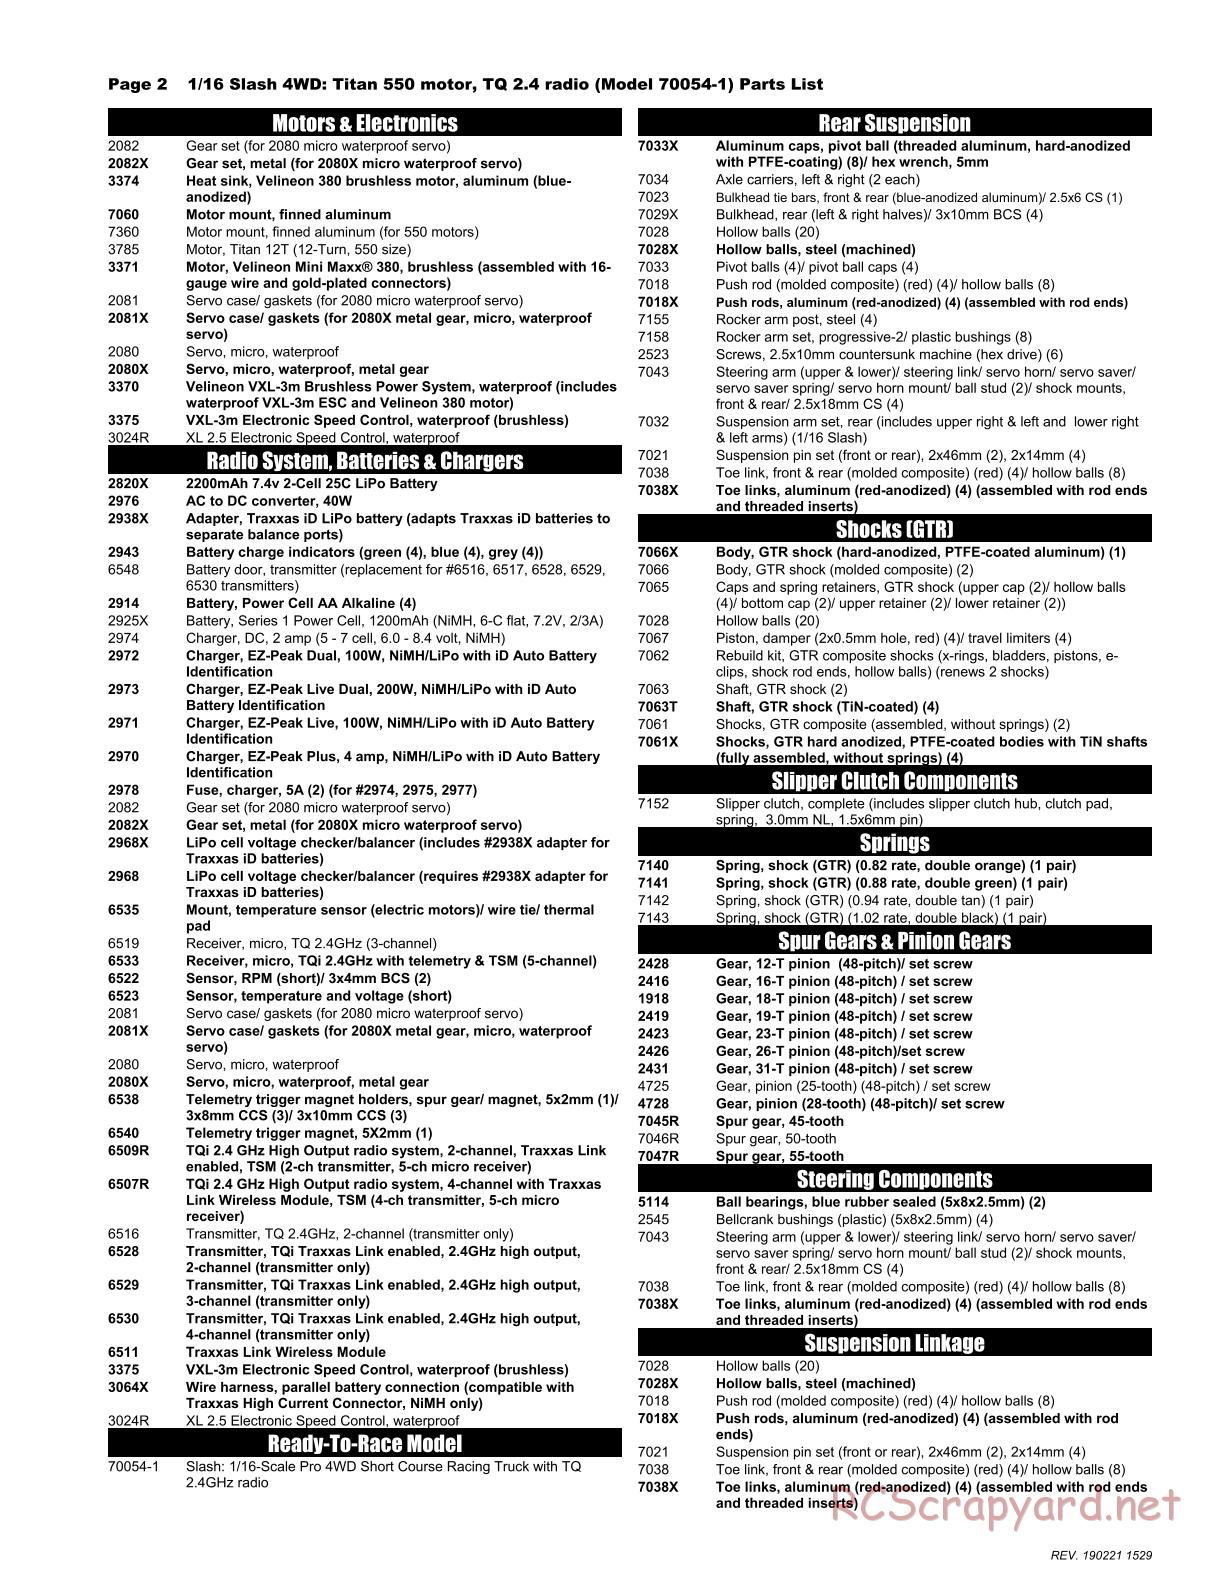 Traxxas - 1/16 Slash 4x4 Brushed - Parts List - Page 2